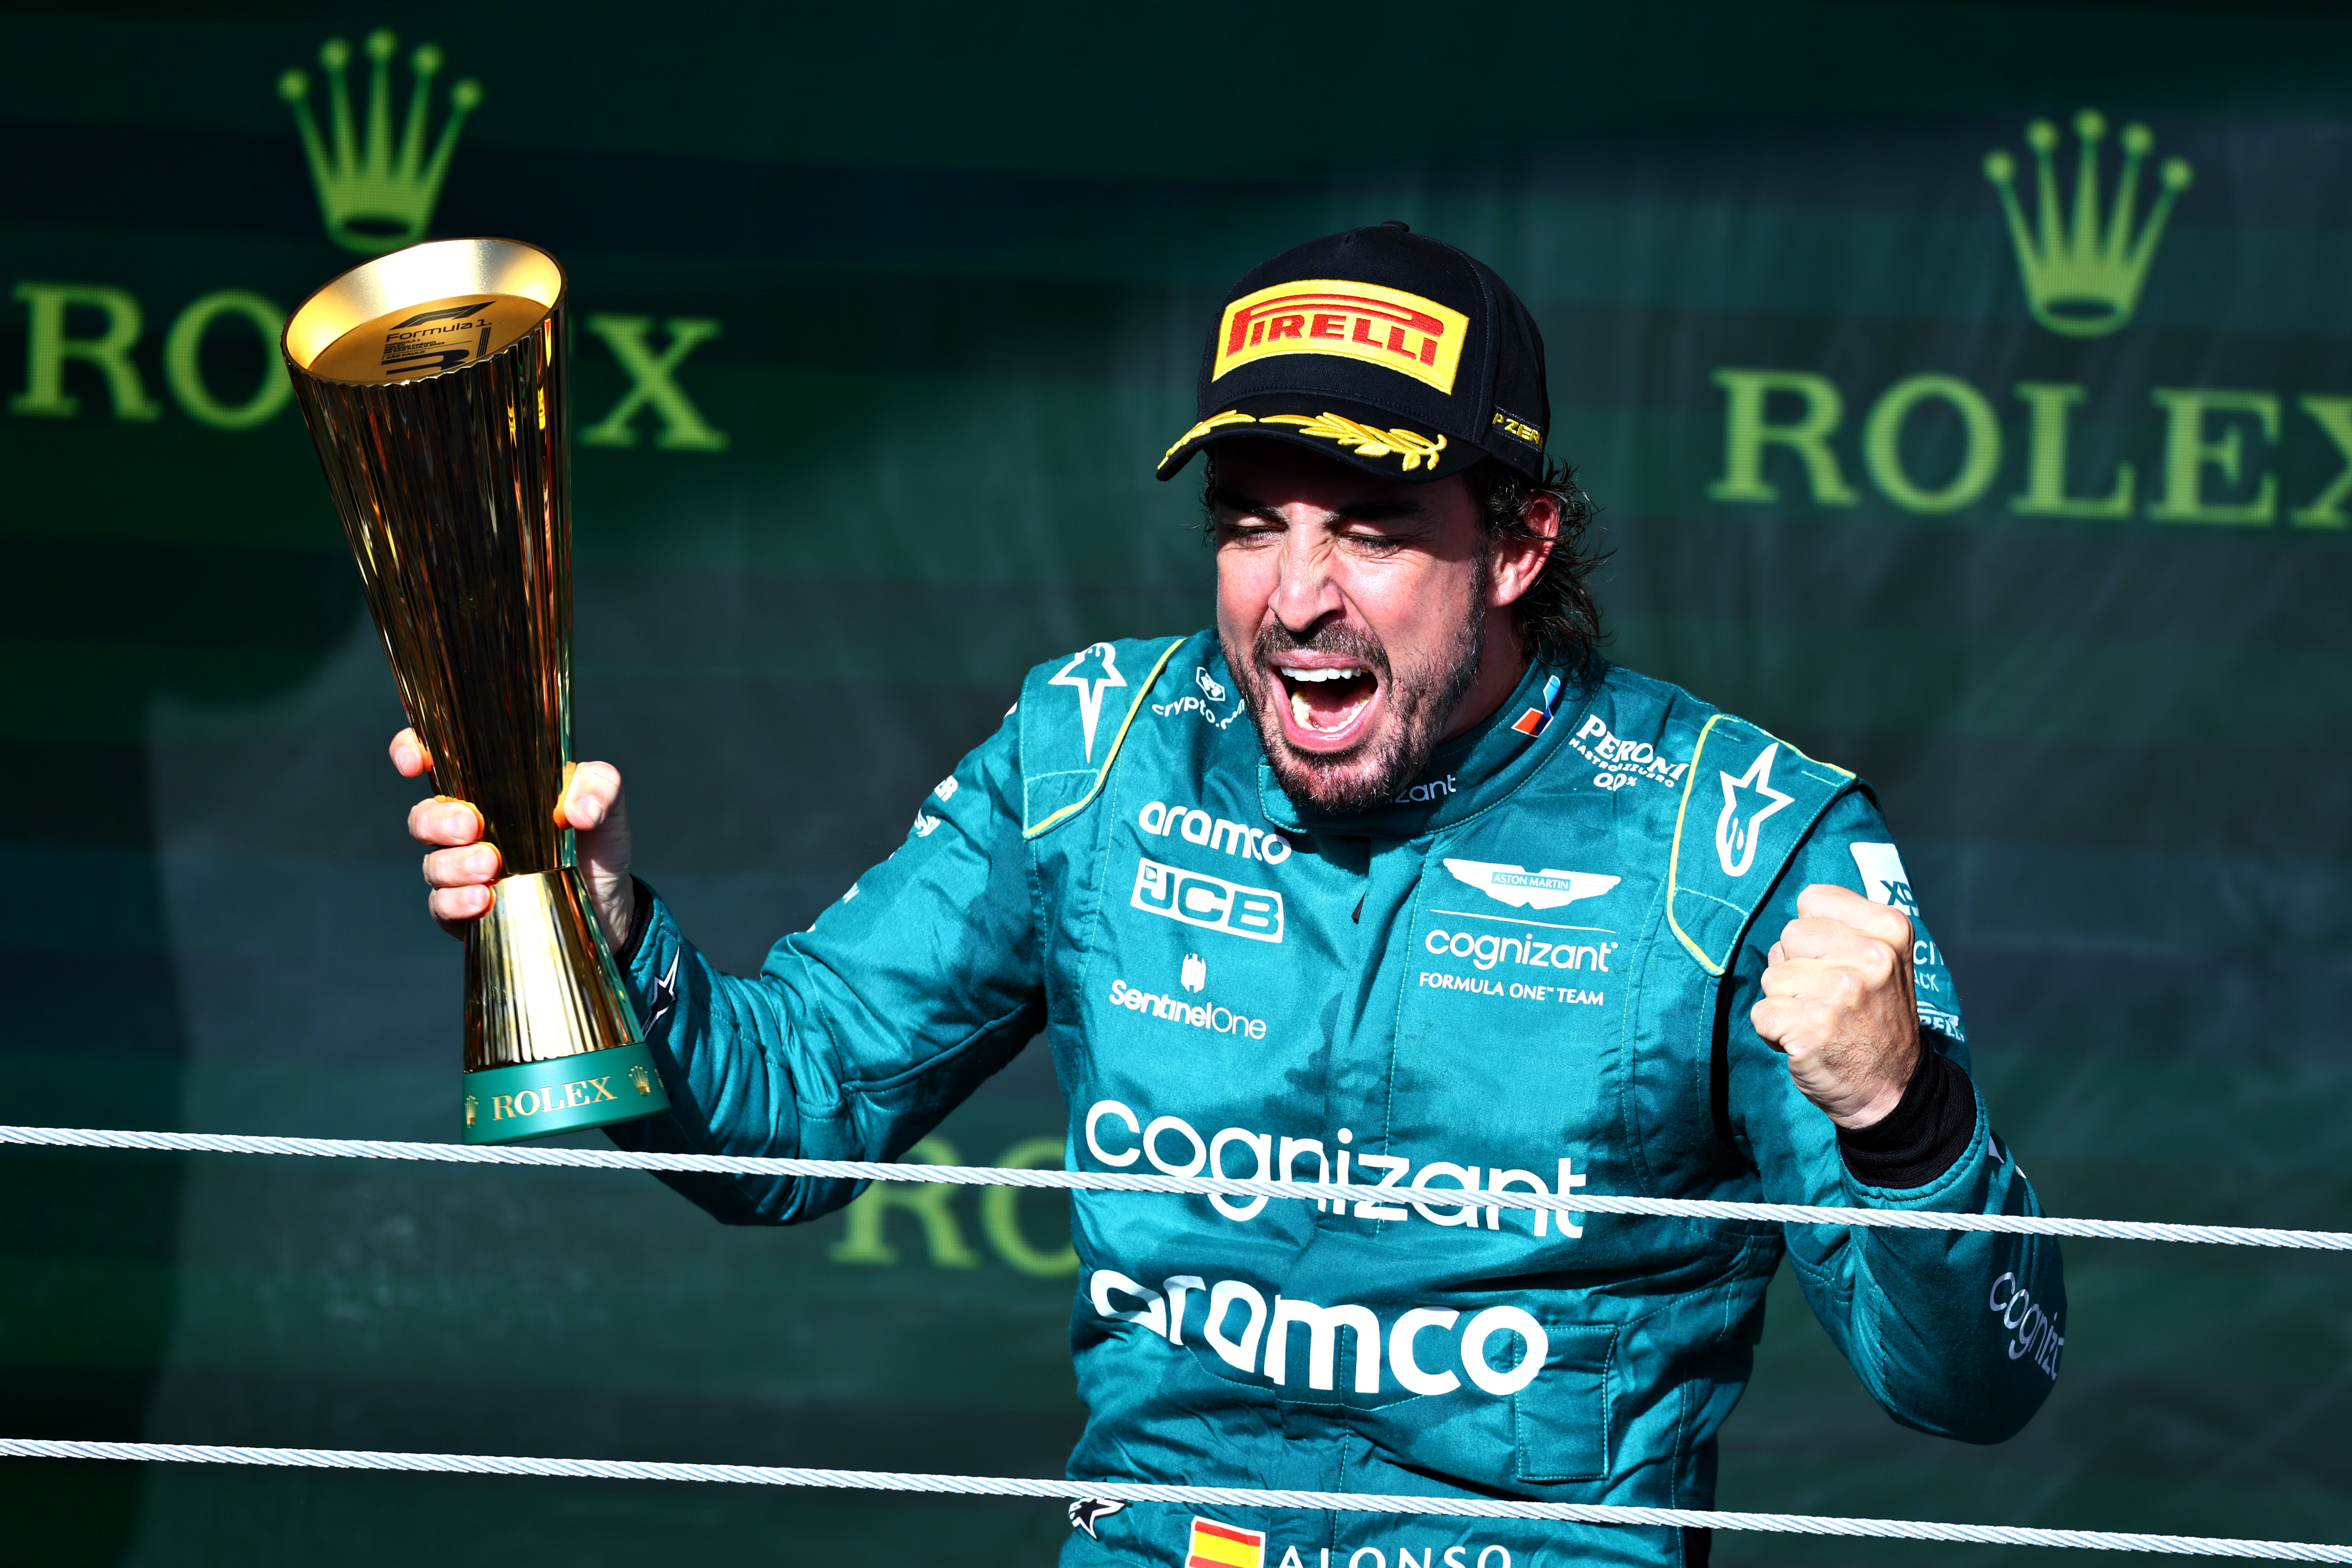 Fernando Alonso celebrates after a hard-fought podium